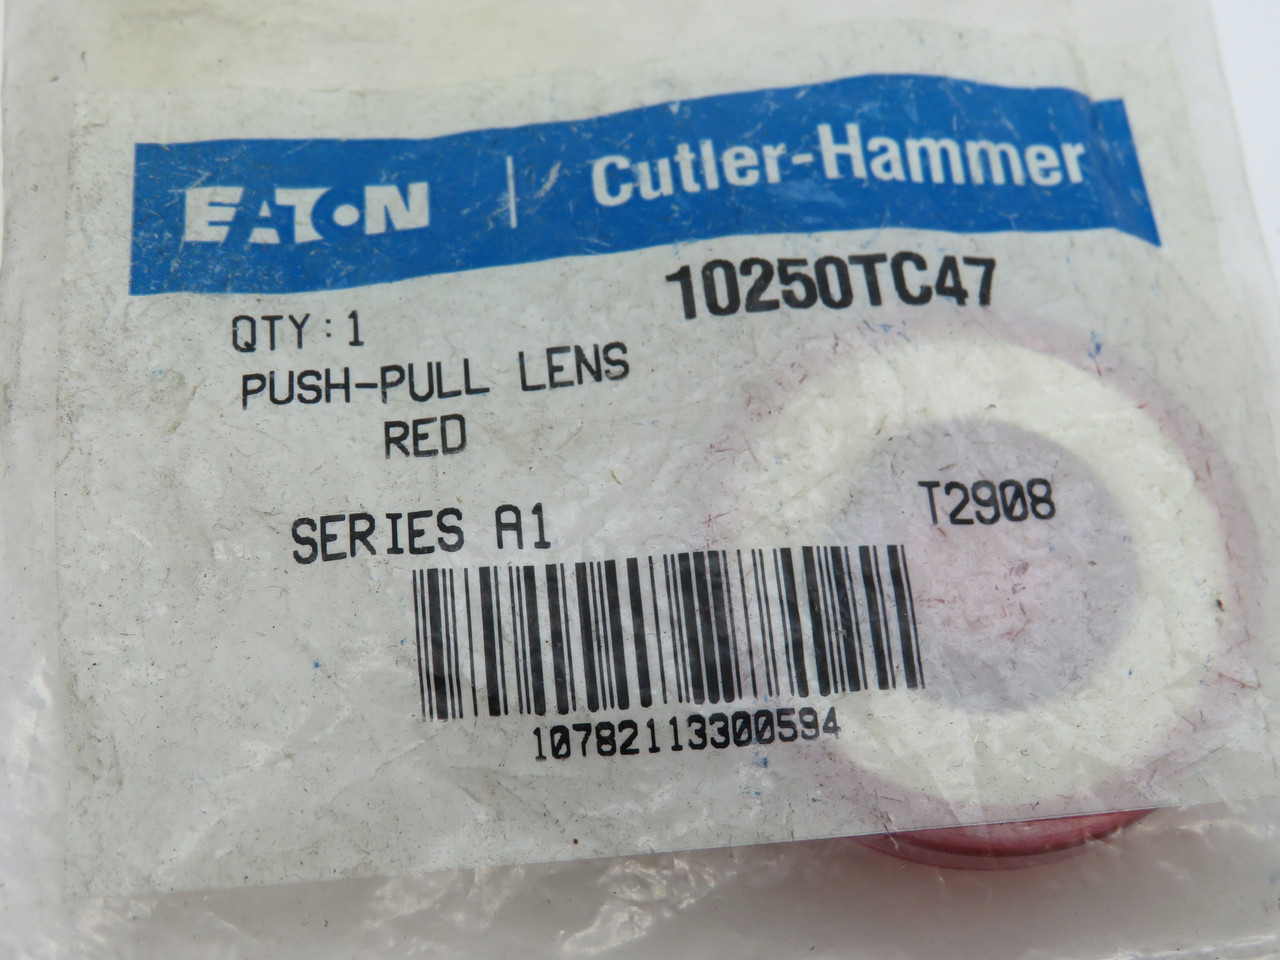 Eaton Cutler-Hammer 10250TC47 Push-Pull Lens RED Series A1 NWB